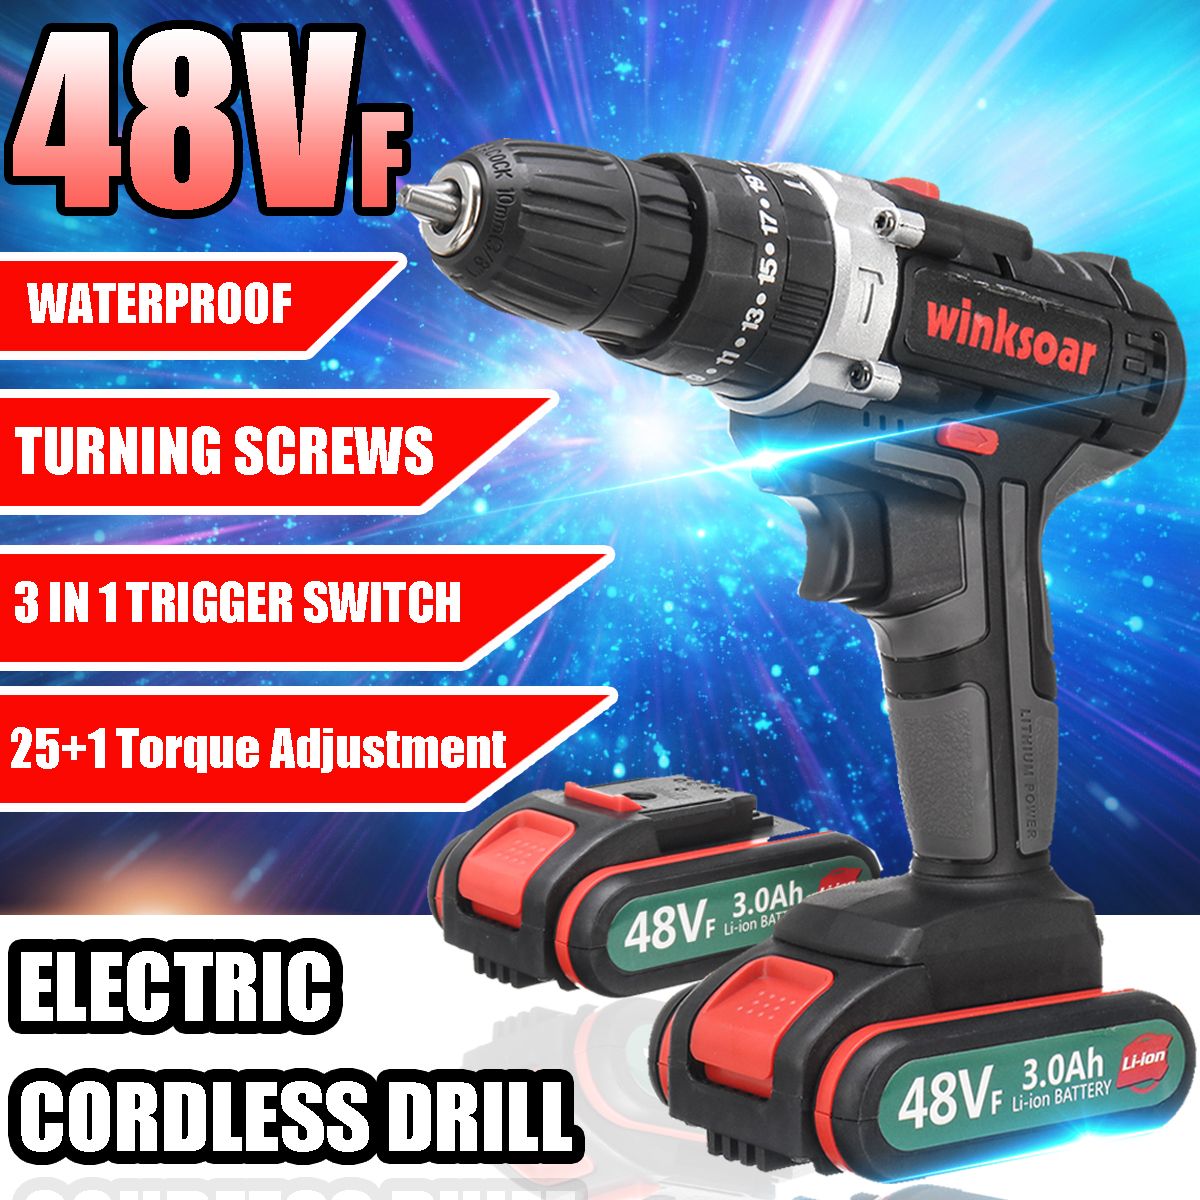 48VF-3000mAh-Li-Ion-Cordless-Power-Drill-Electric-Drill-Driver-Screwdriver-Repair-Tool-1475231